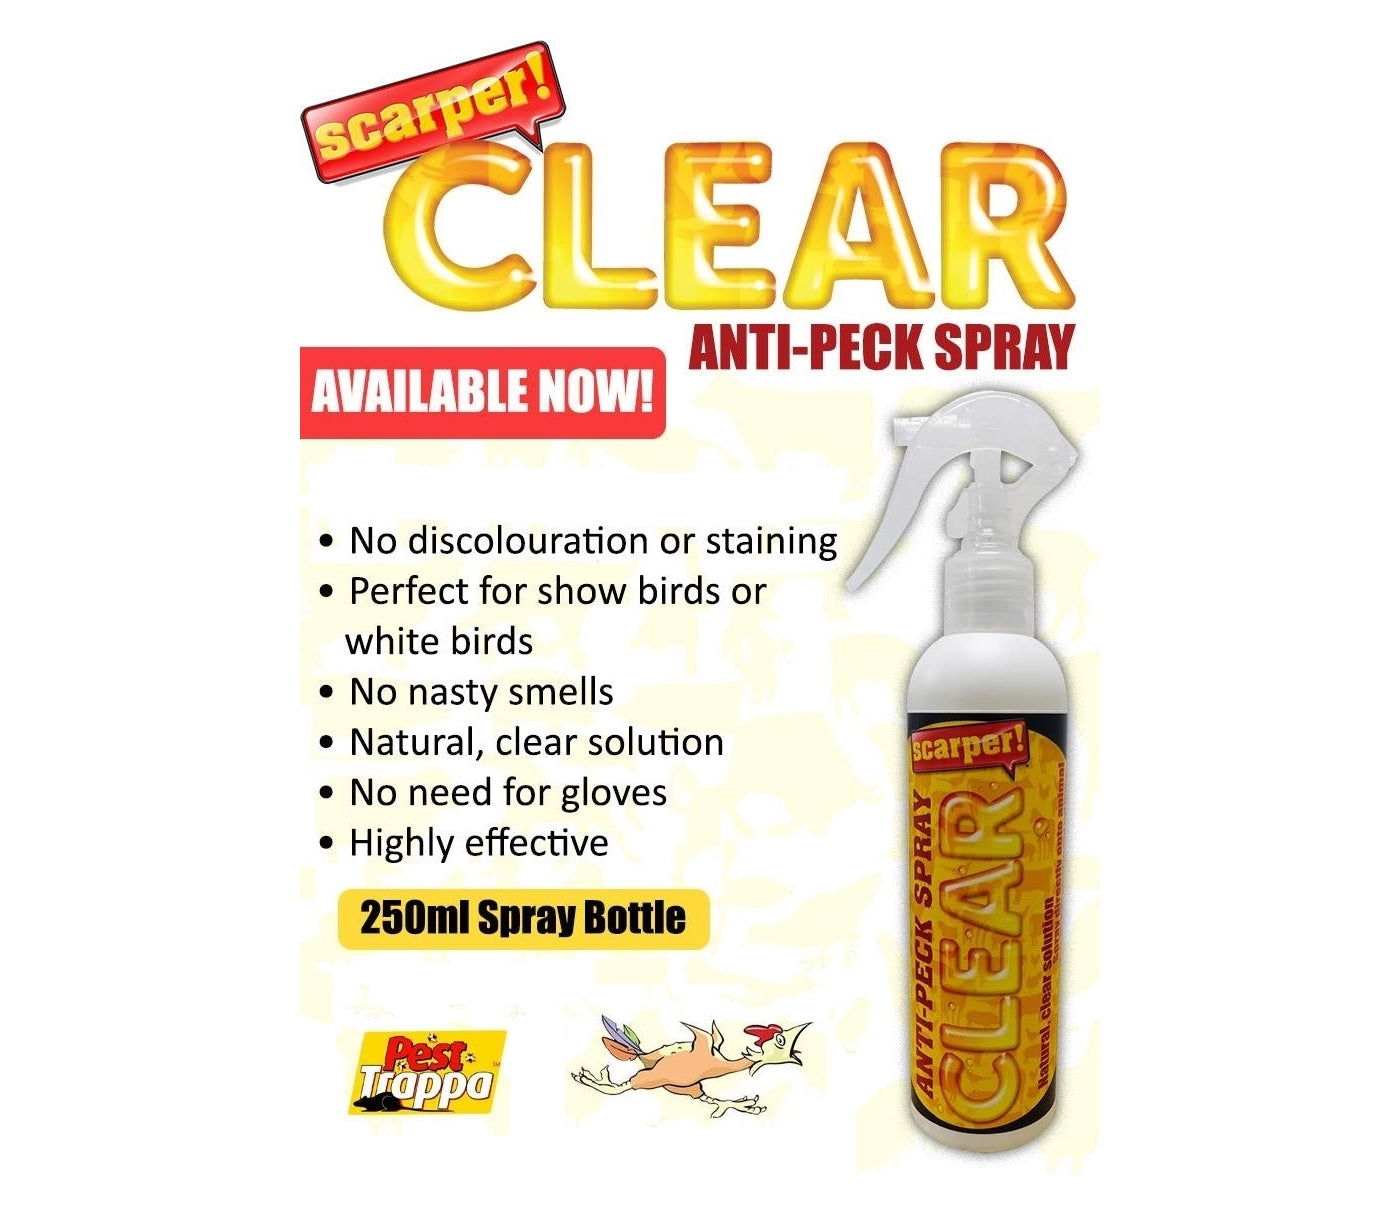 Scarper Clear 250ml | Anti-Peck Sprayfor Poultry - Buy Online SPR Centre UK